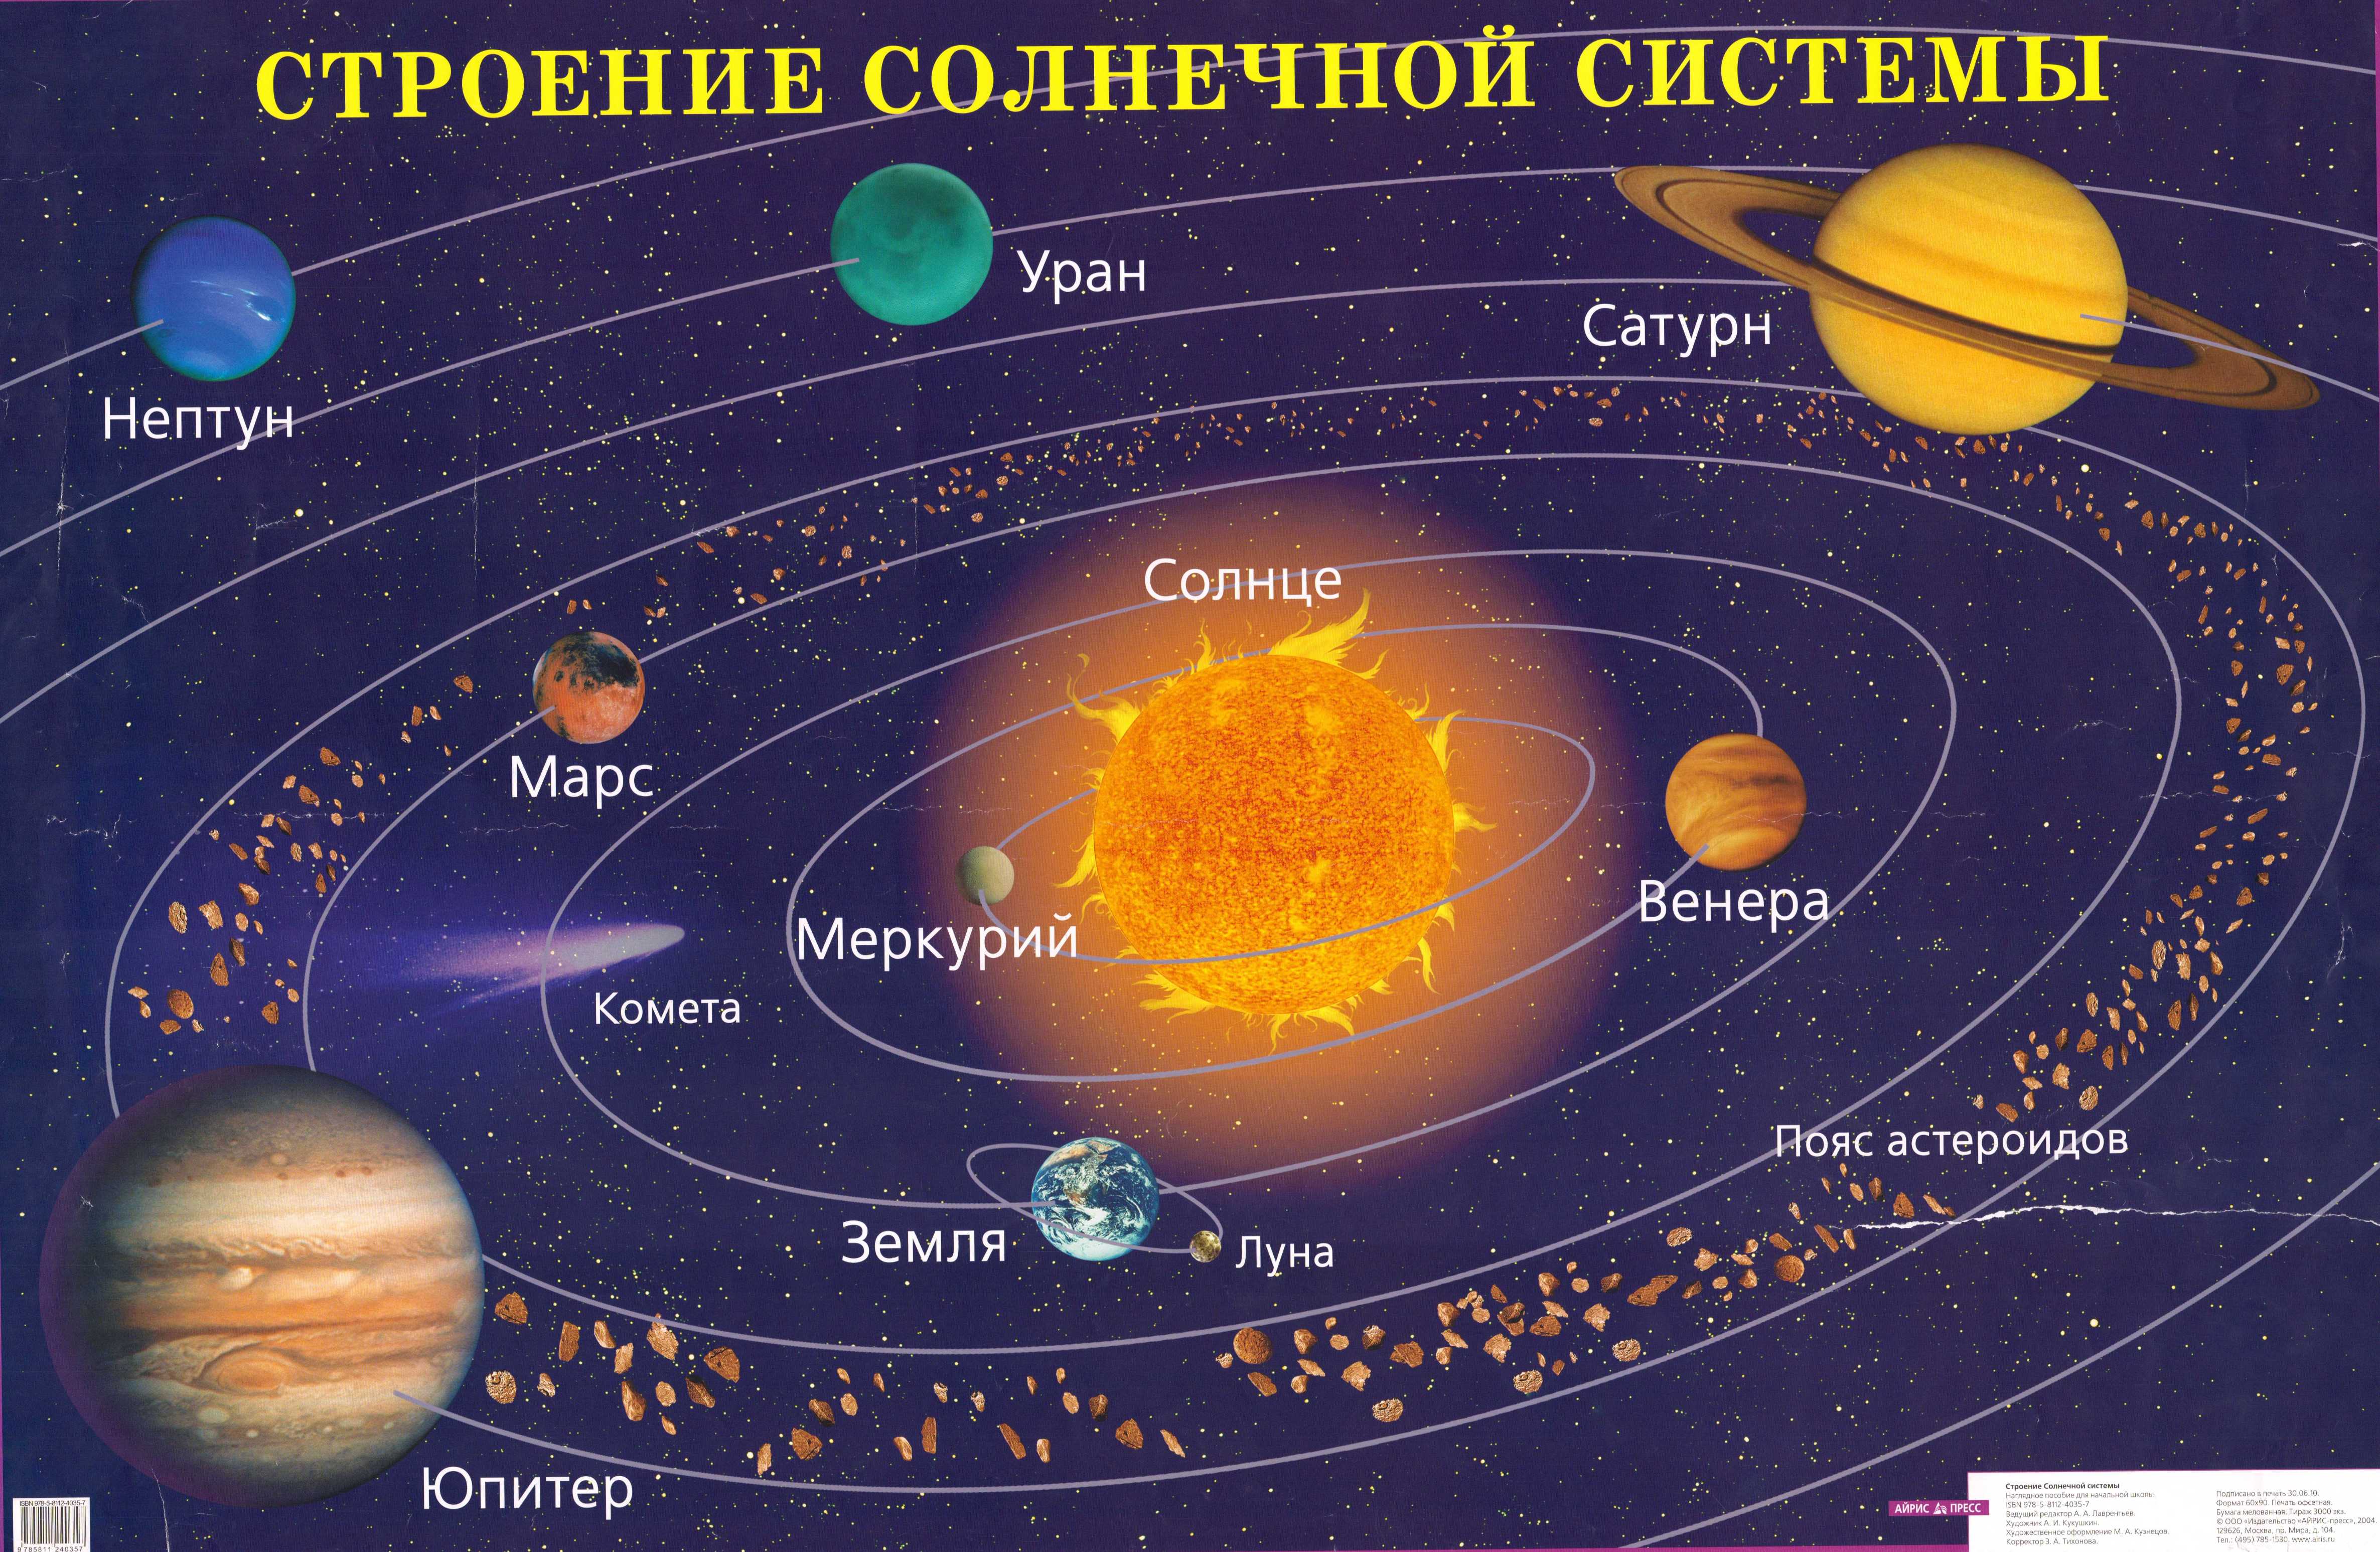 Местоположение планет. Солнечная система с названиями планет. Расположение планет солнечной системы. Строение и структура солнечной системы. Строение планет солнечной системы.